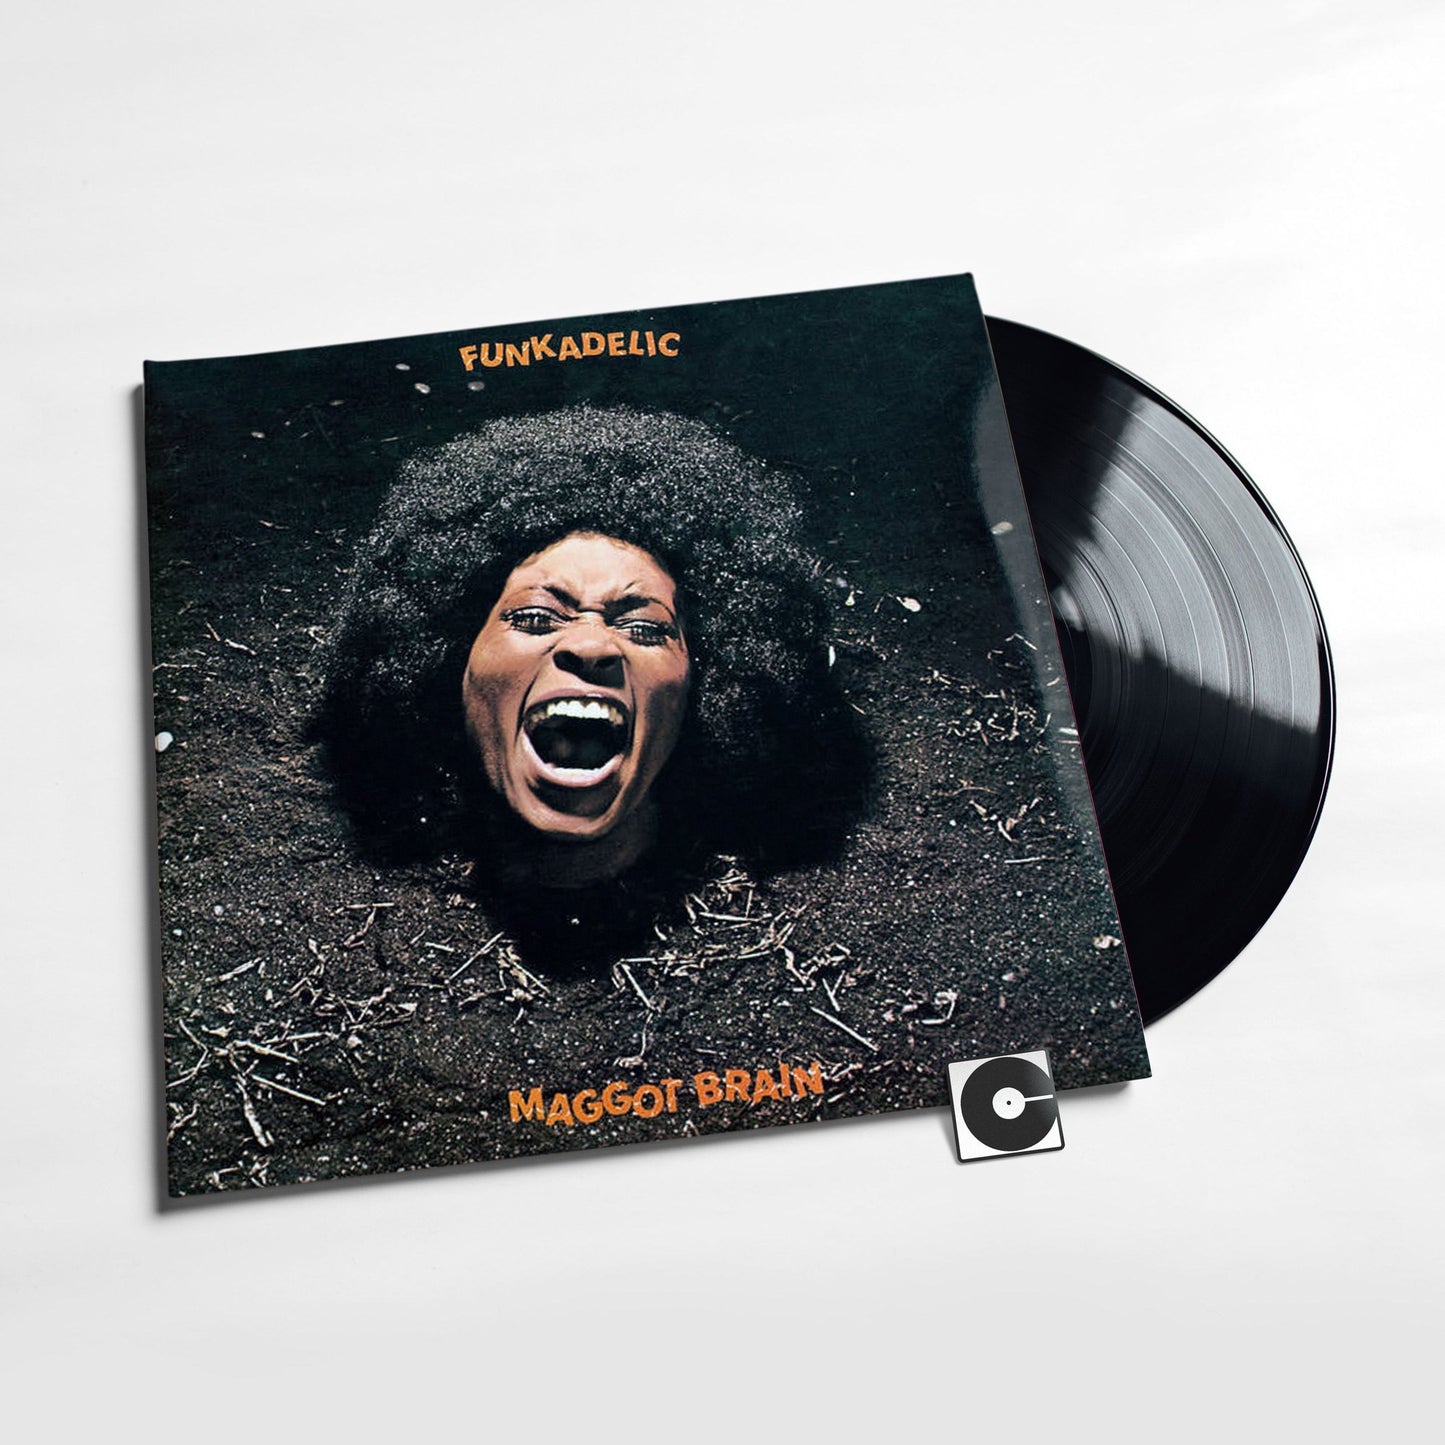 Funkadelic - "Maggot Brain"